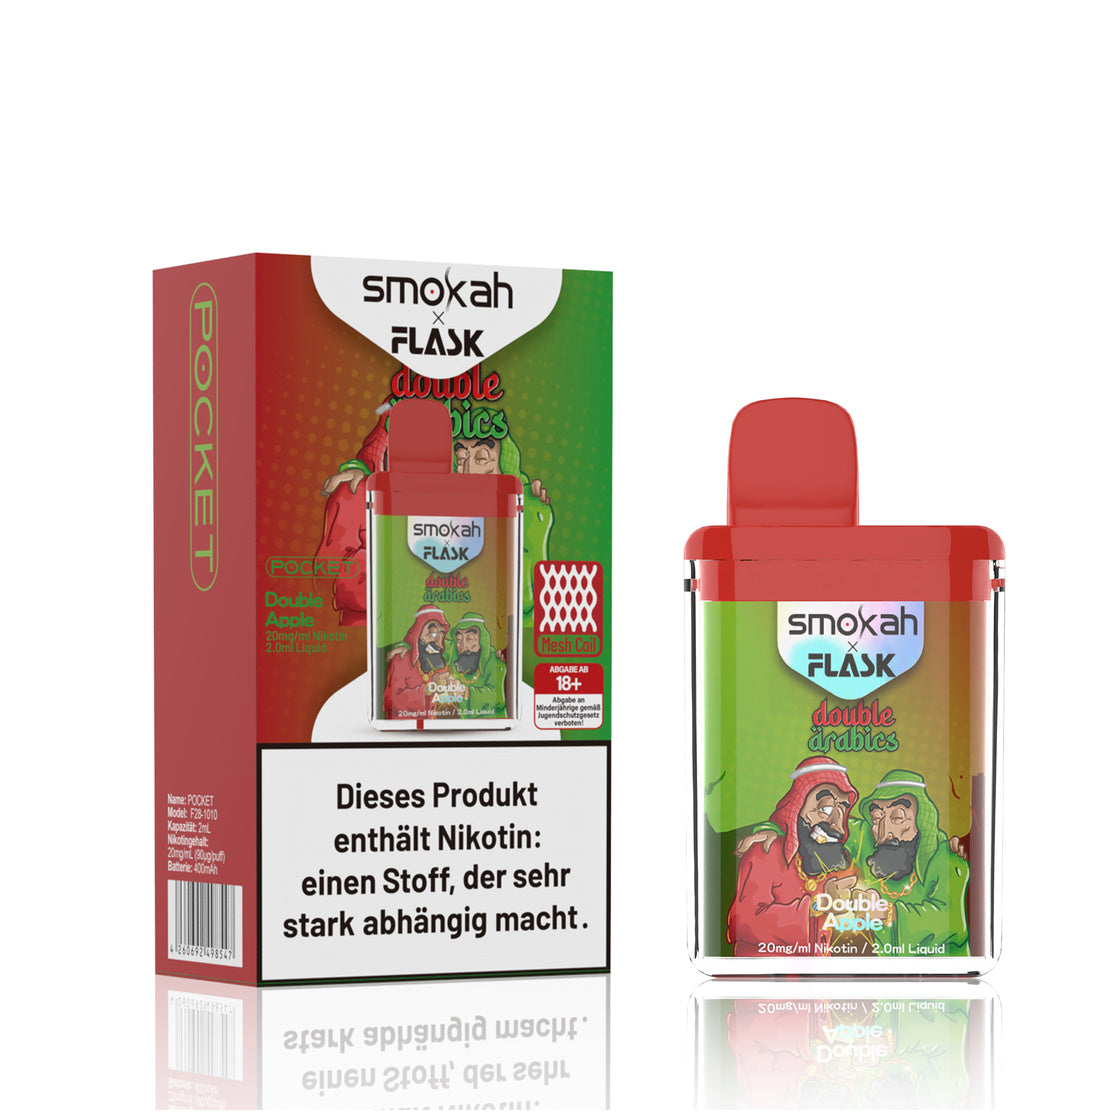 Smokah x Flask Pocket Vape: Doppel Apfel – Klassisch, doppelt so gut